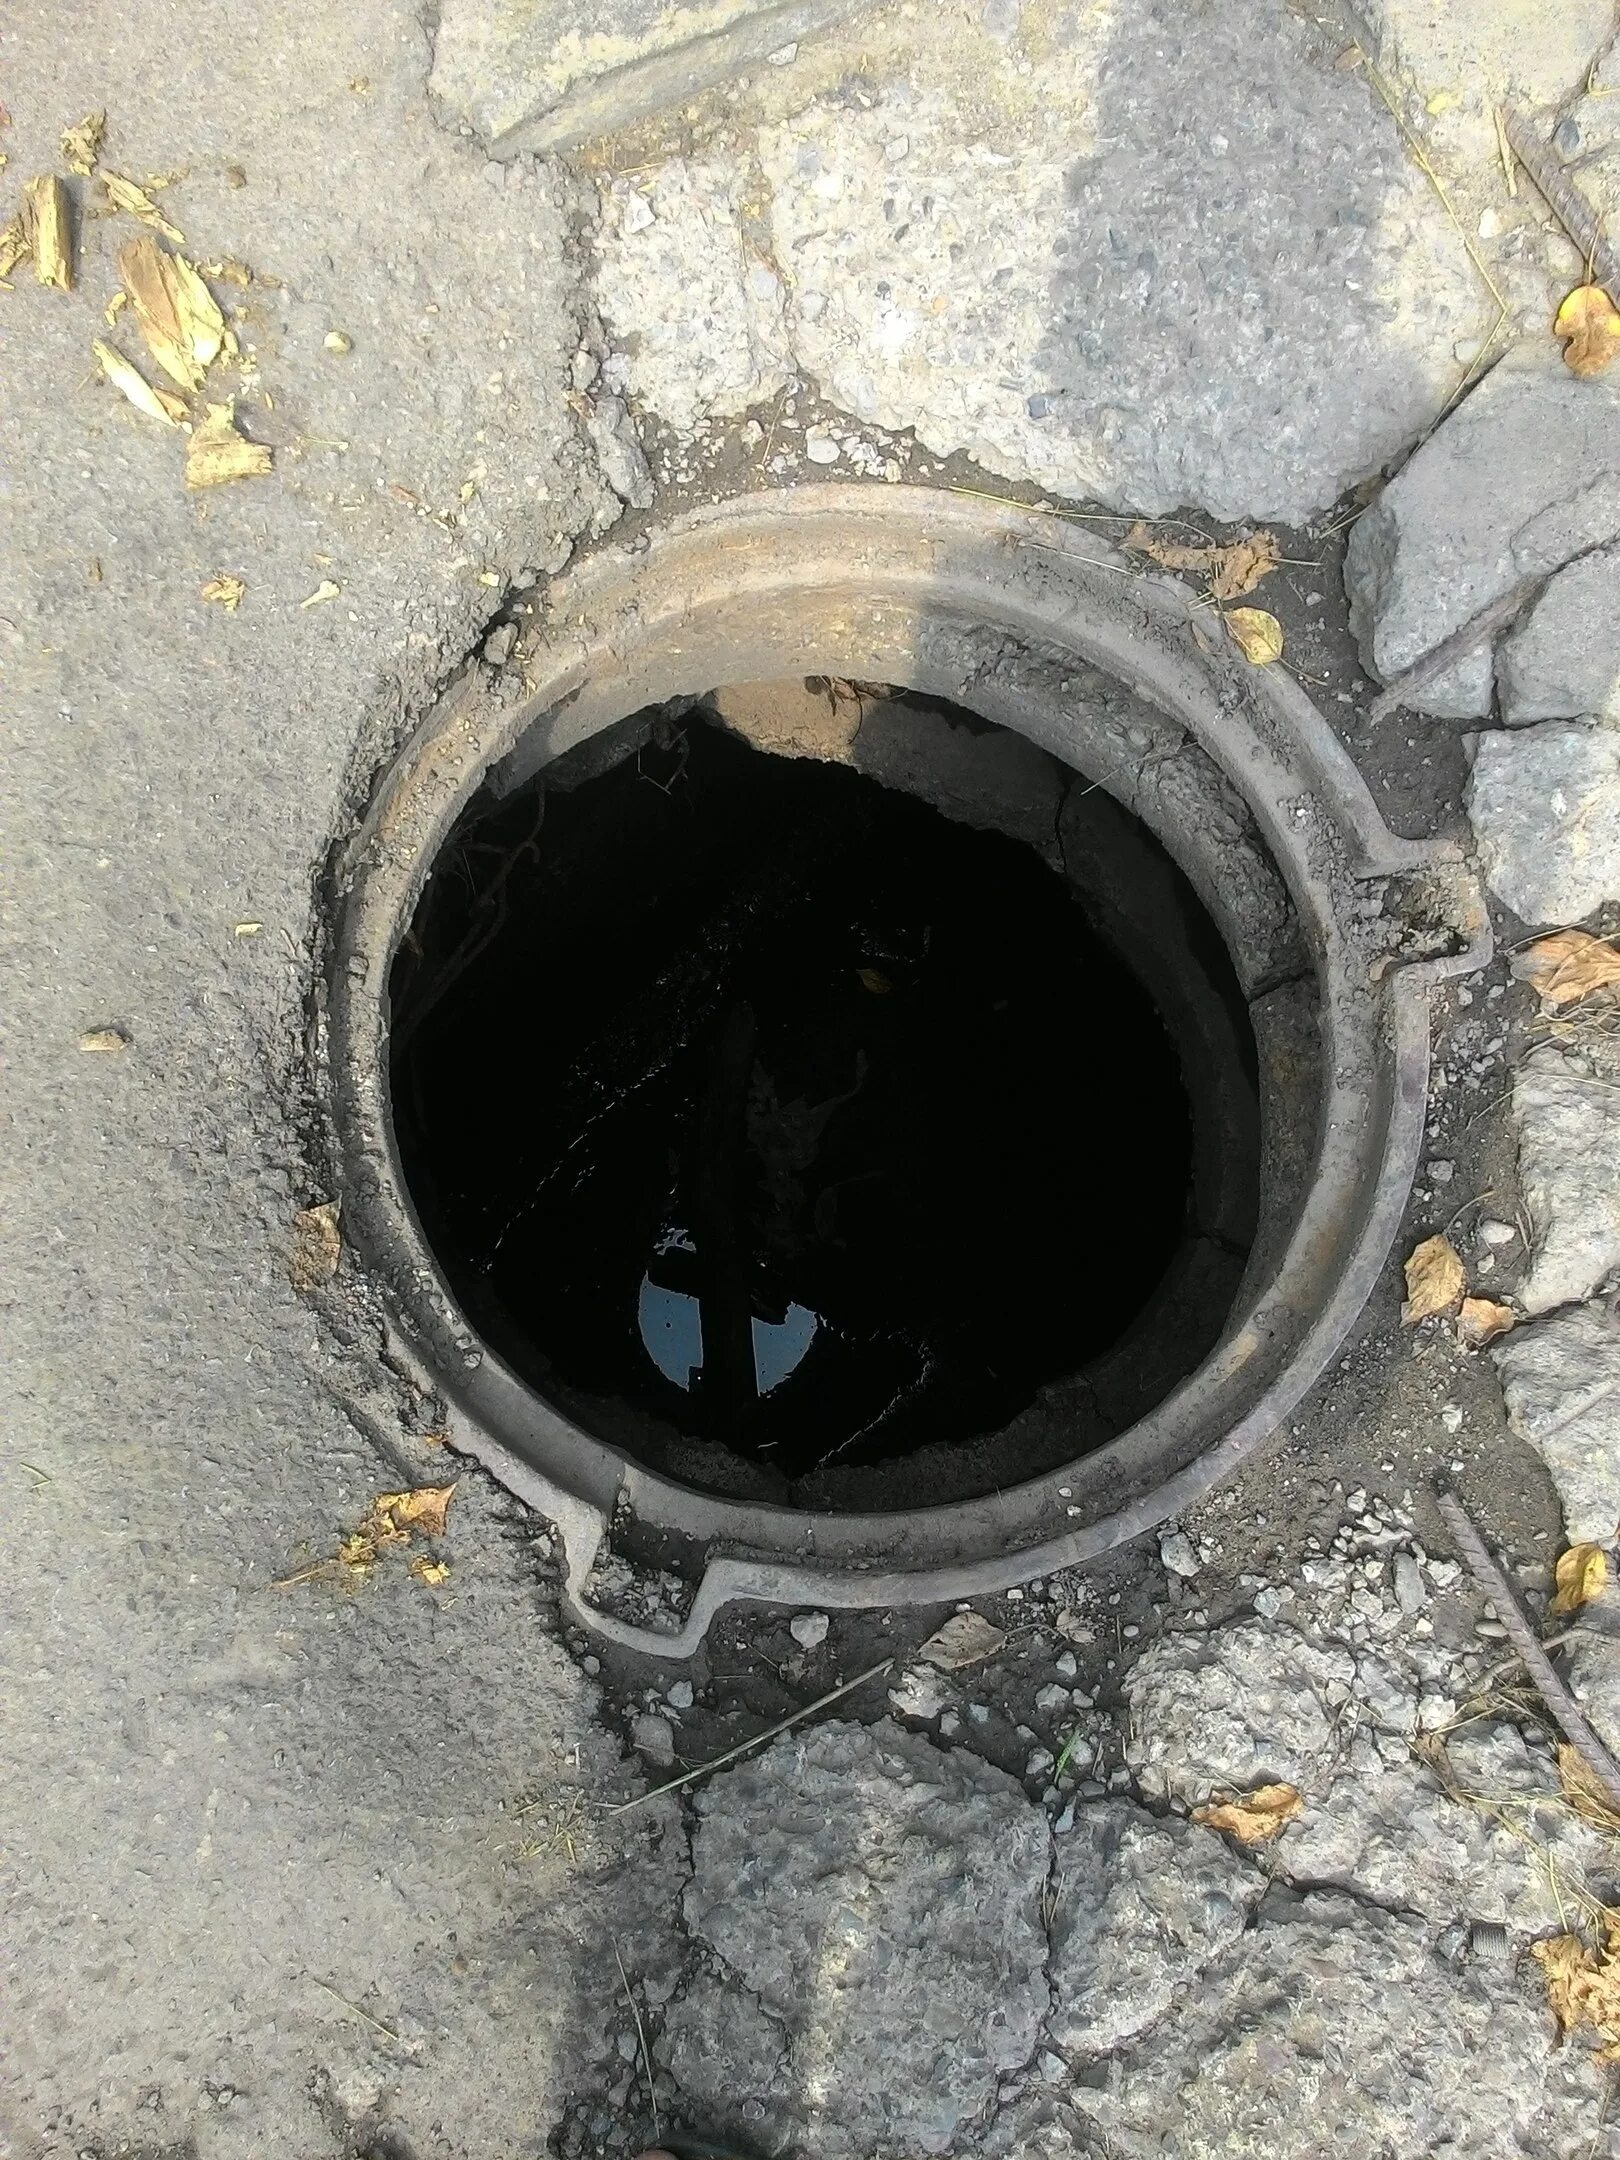 Открытый канализационный люк. Открытый люк канализации. Открытые канализационные люки. Открытый канализационный колодец.